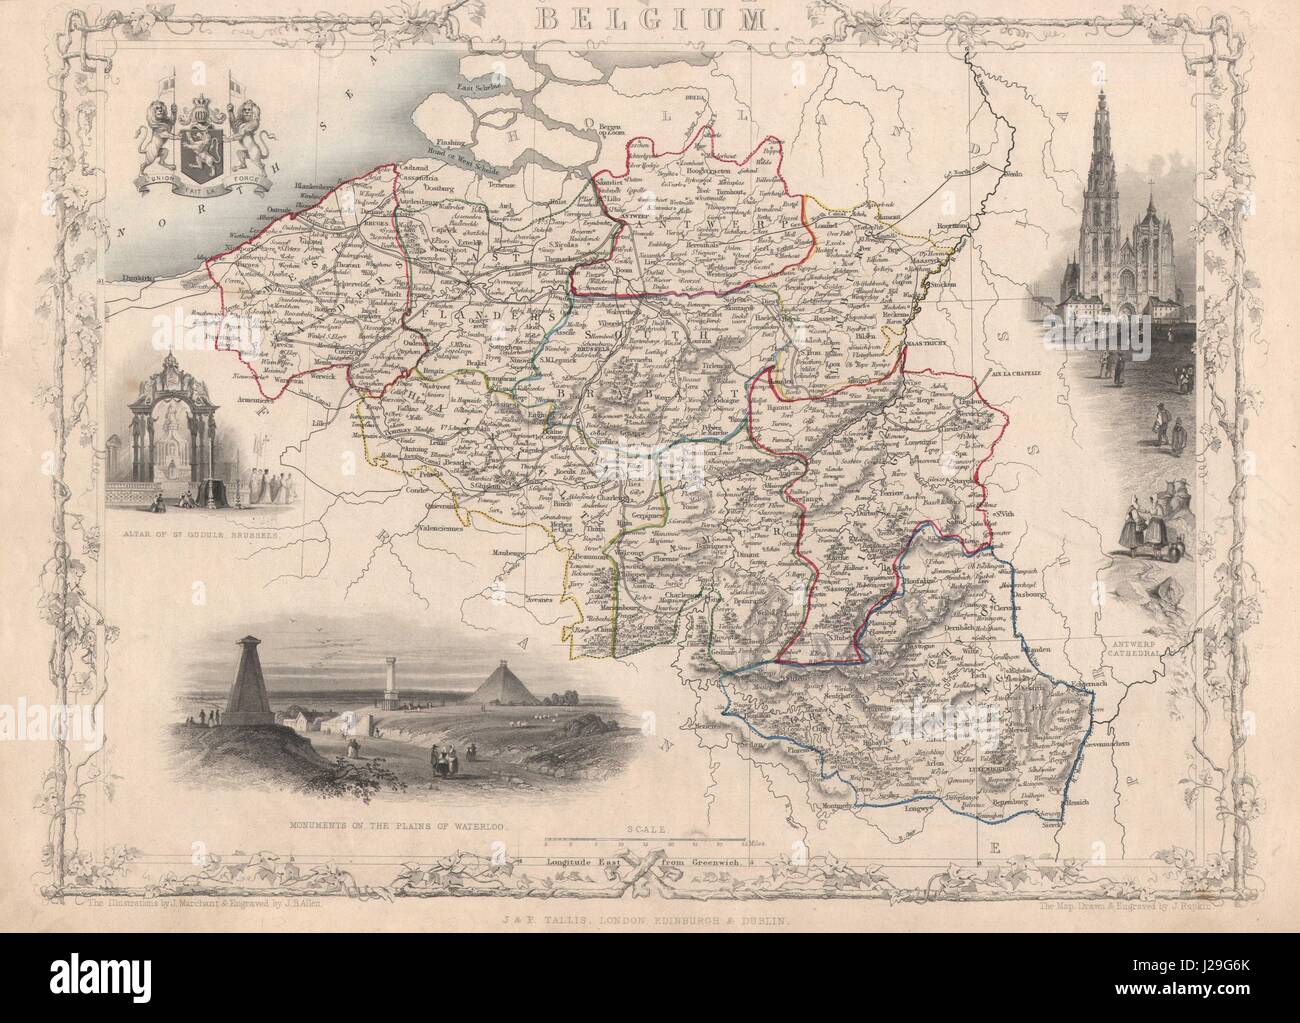 BELGIUM & Luxembourg. Antwerp Waterloo. No fold Trimmed. TALLIS/RAPKIN c1851 map Stock Photo